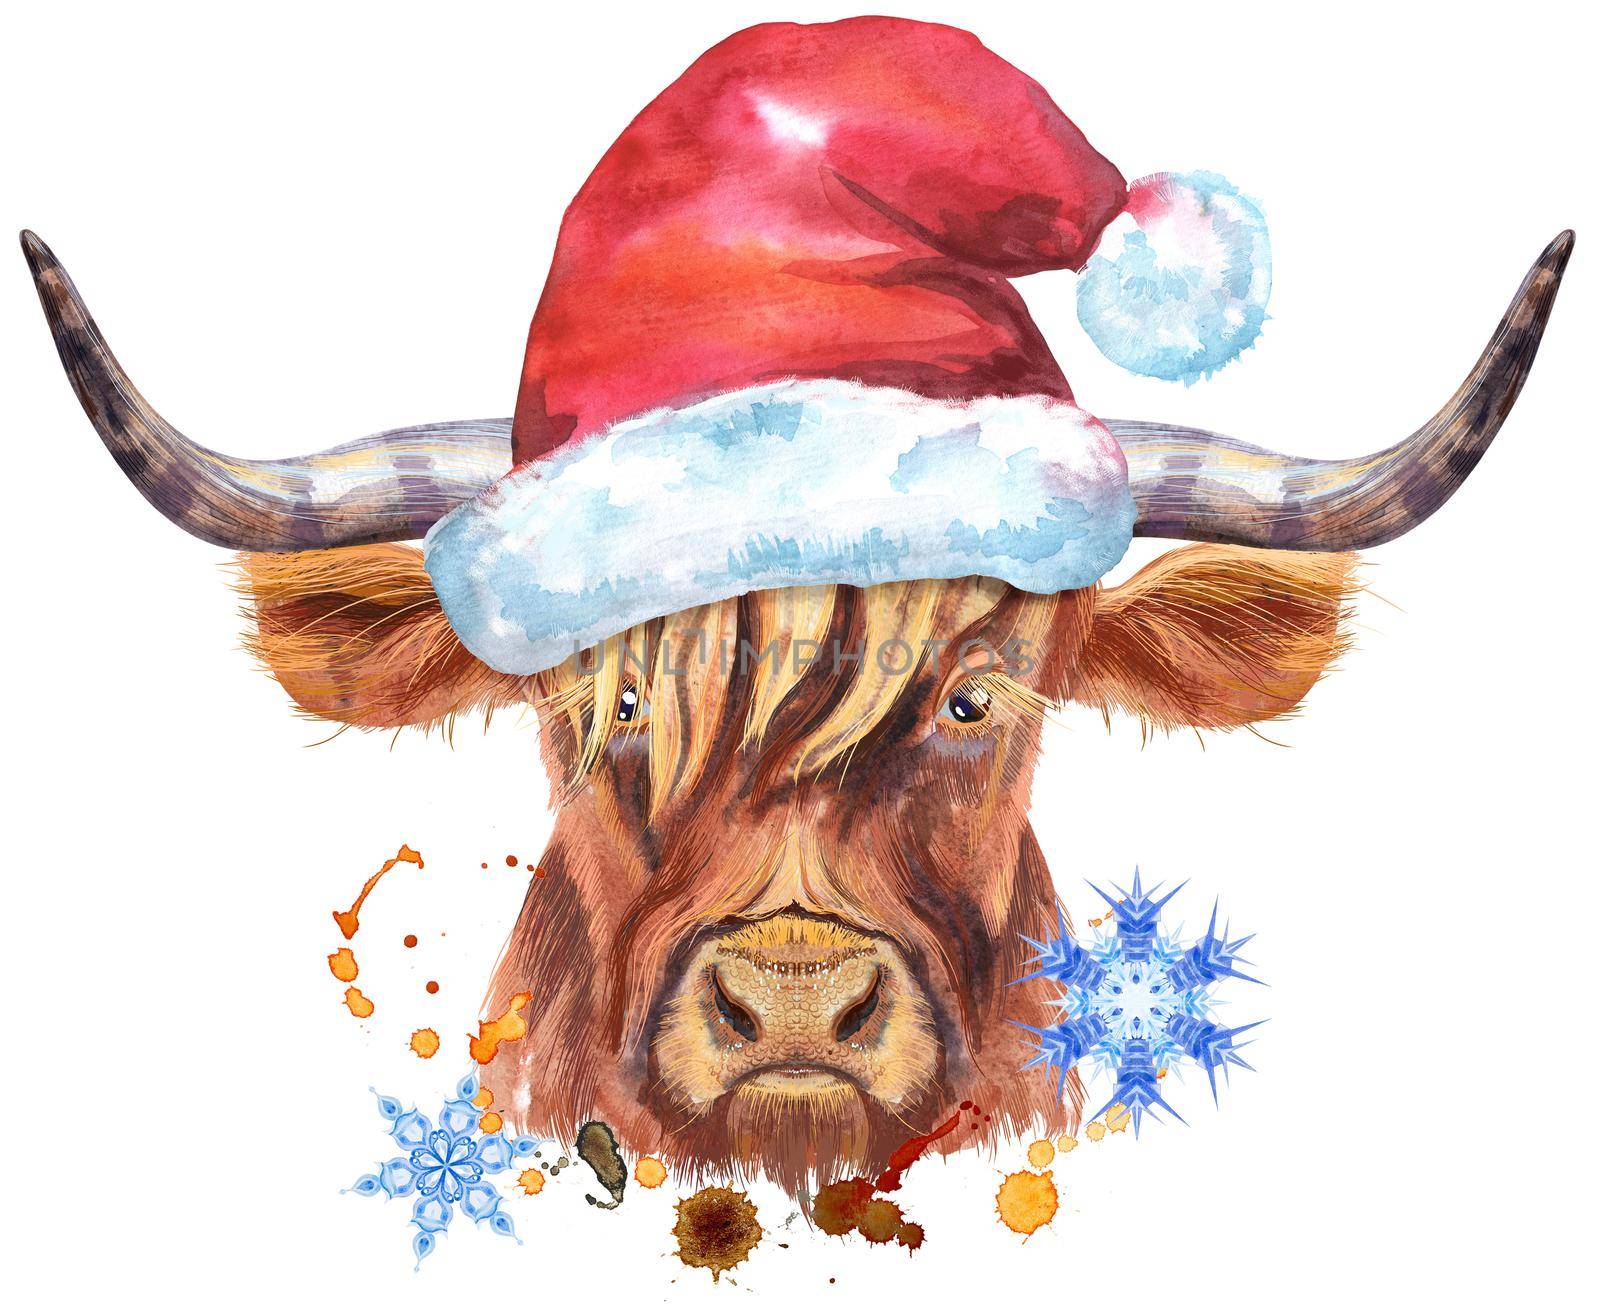 Bull watercolor graphics in Santa hat. Bull animal illustration with splash watercolor textured background.